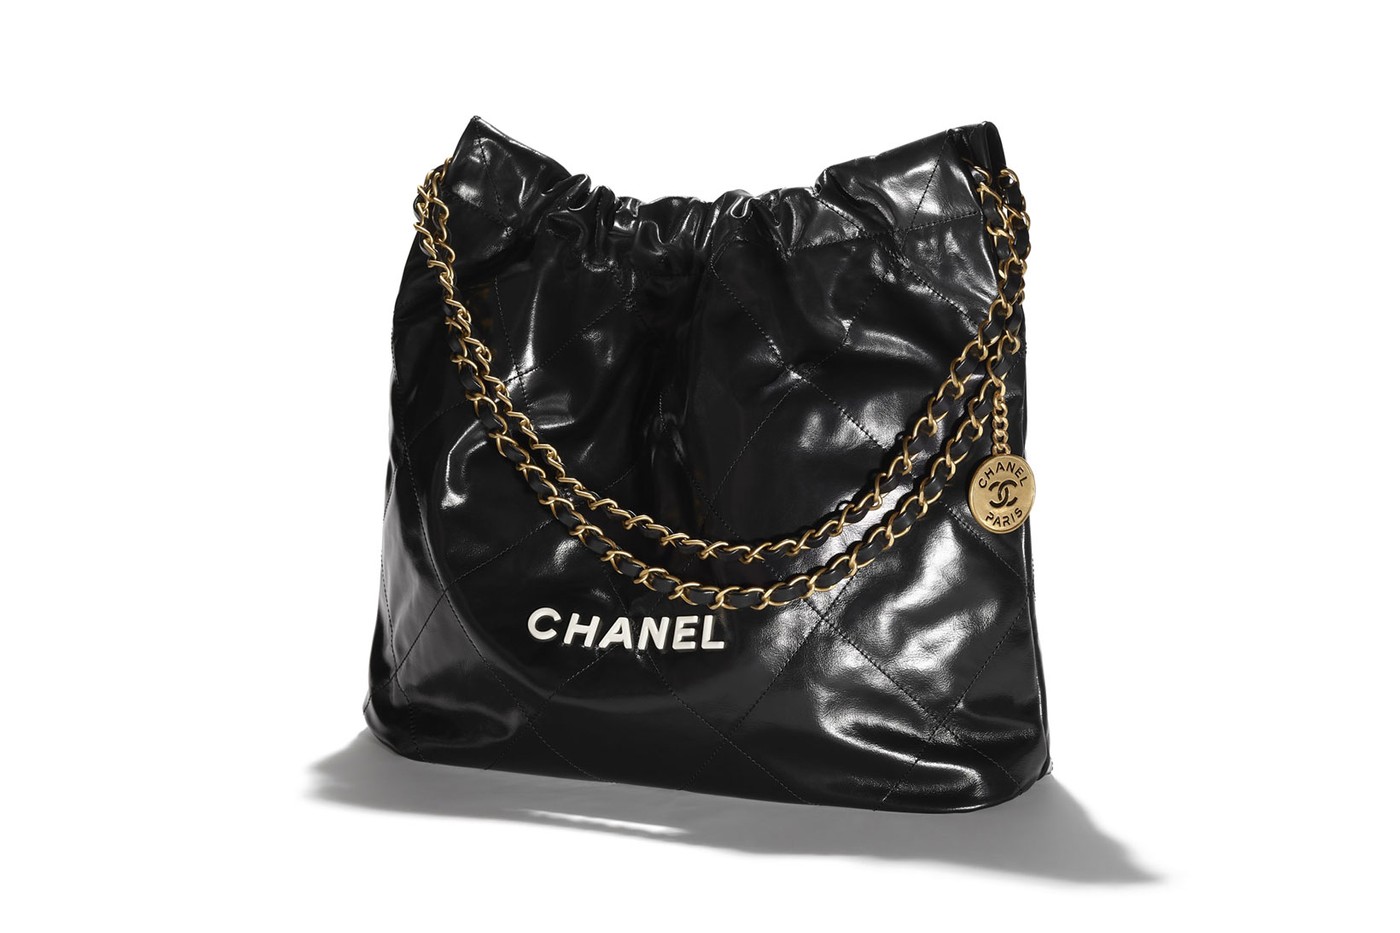 Виржини Виар представила новую сумку Chanel (фото 6)